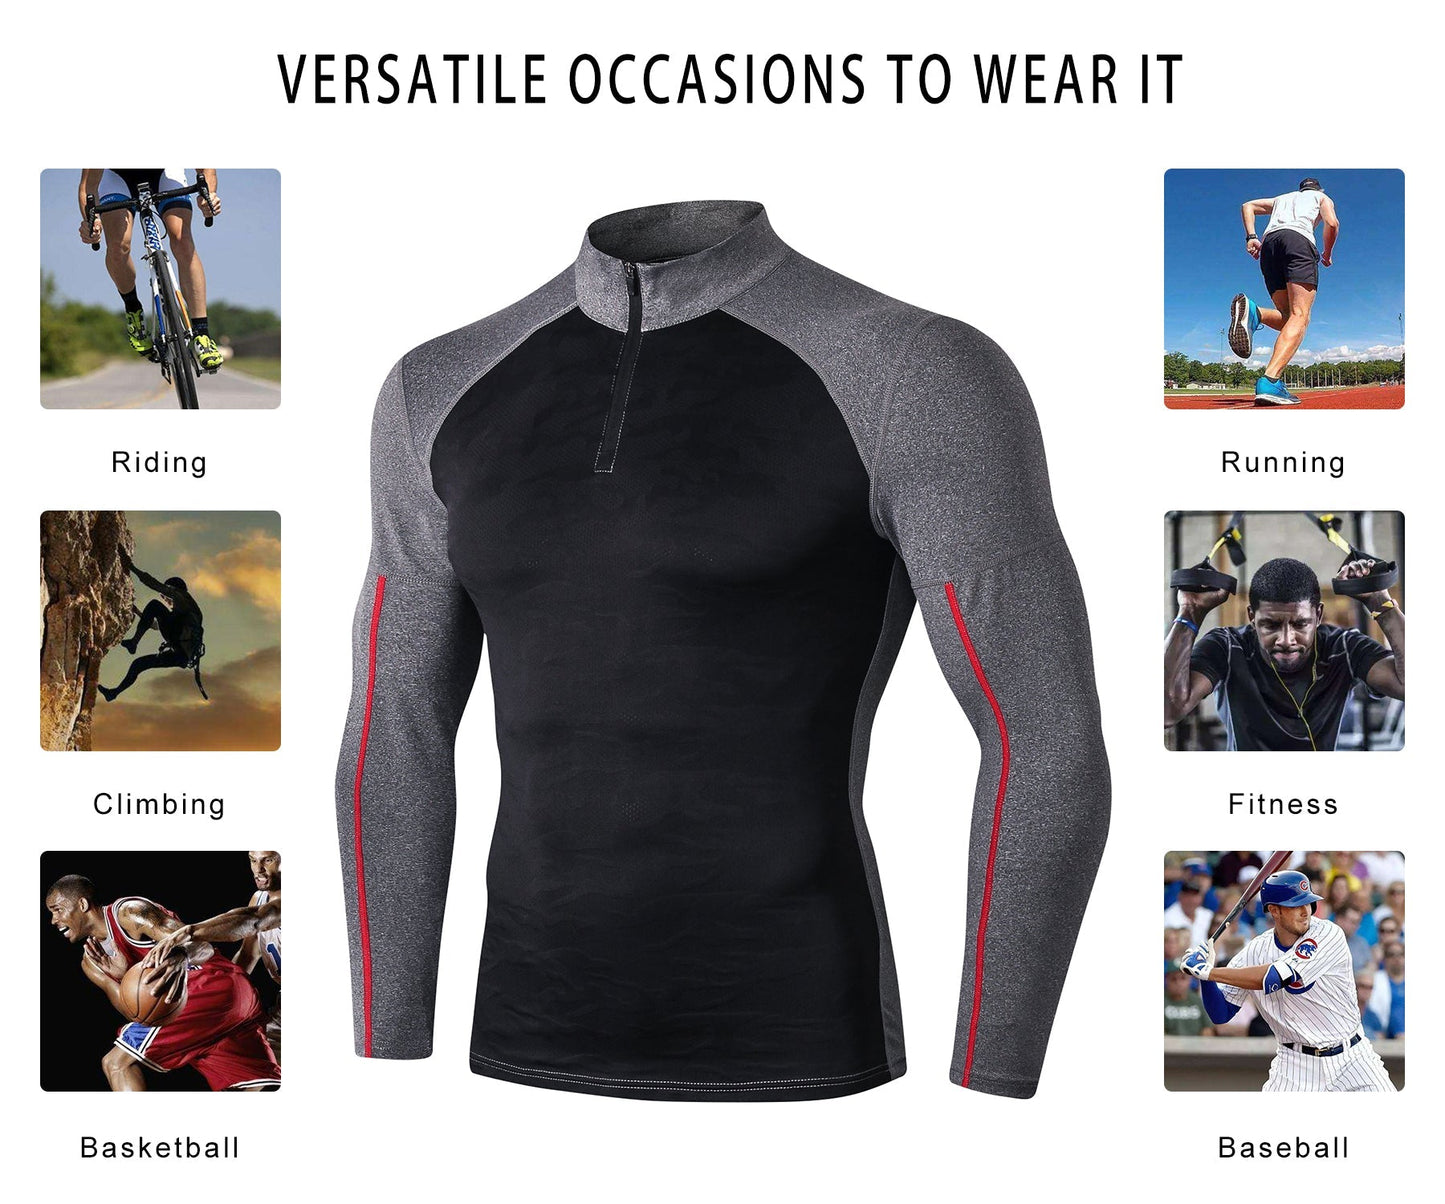 Mens Long Sleeve Compression Shirts Quarter Zip Pullover Workout Mock Neck Undershirt Running Gym Tops LANBAOSI